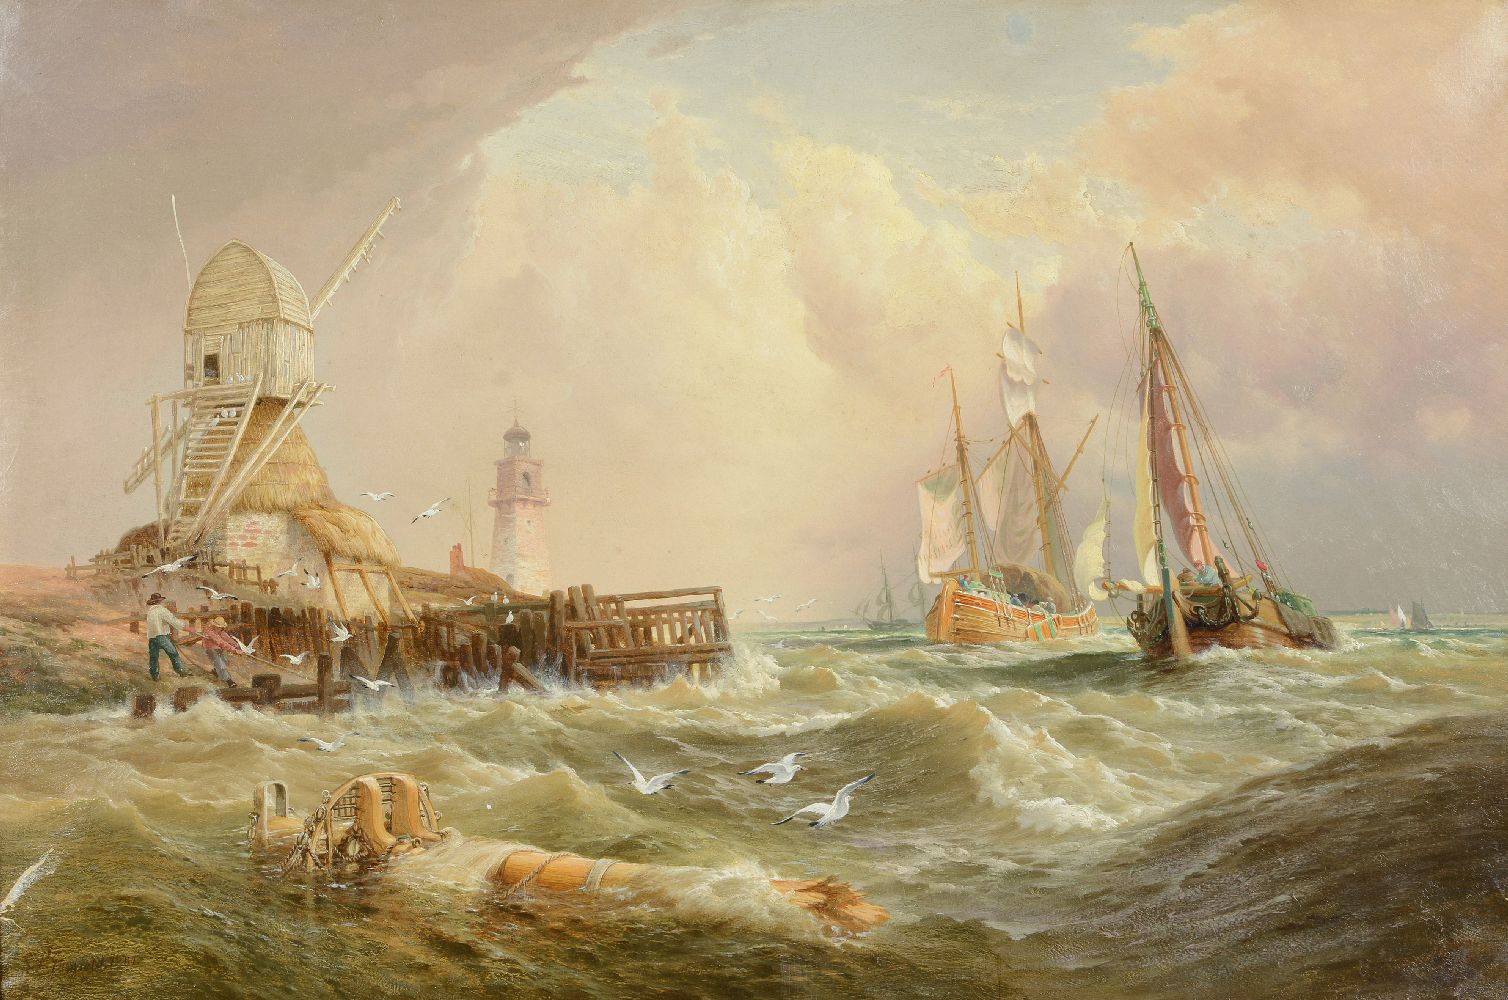 Clarkson Frederick Stanfield (British 1793-1867)Stormy seas in Holland